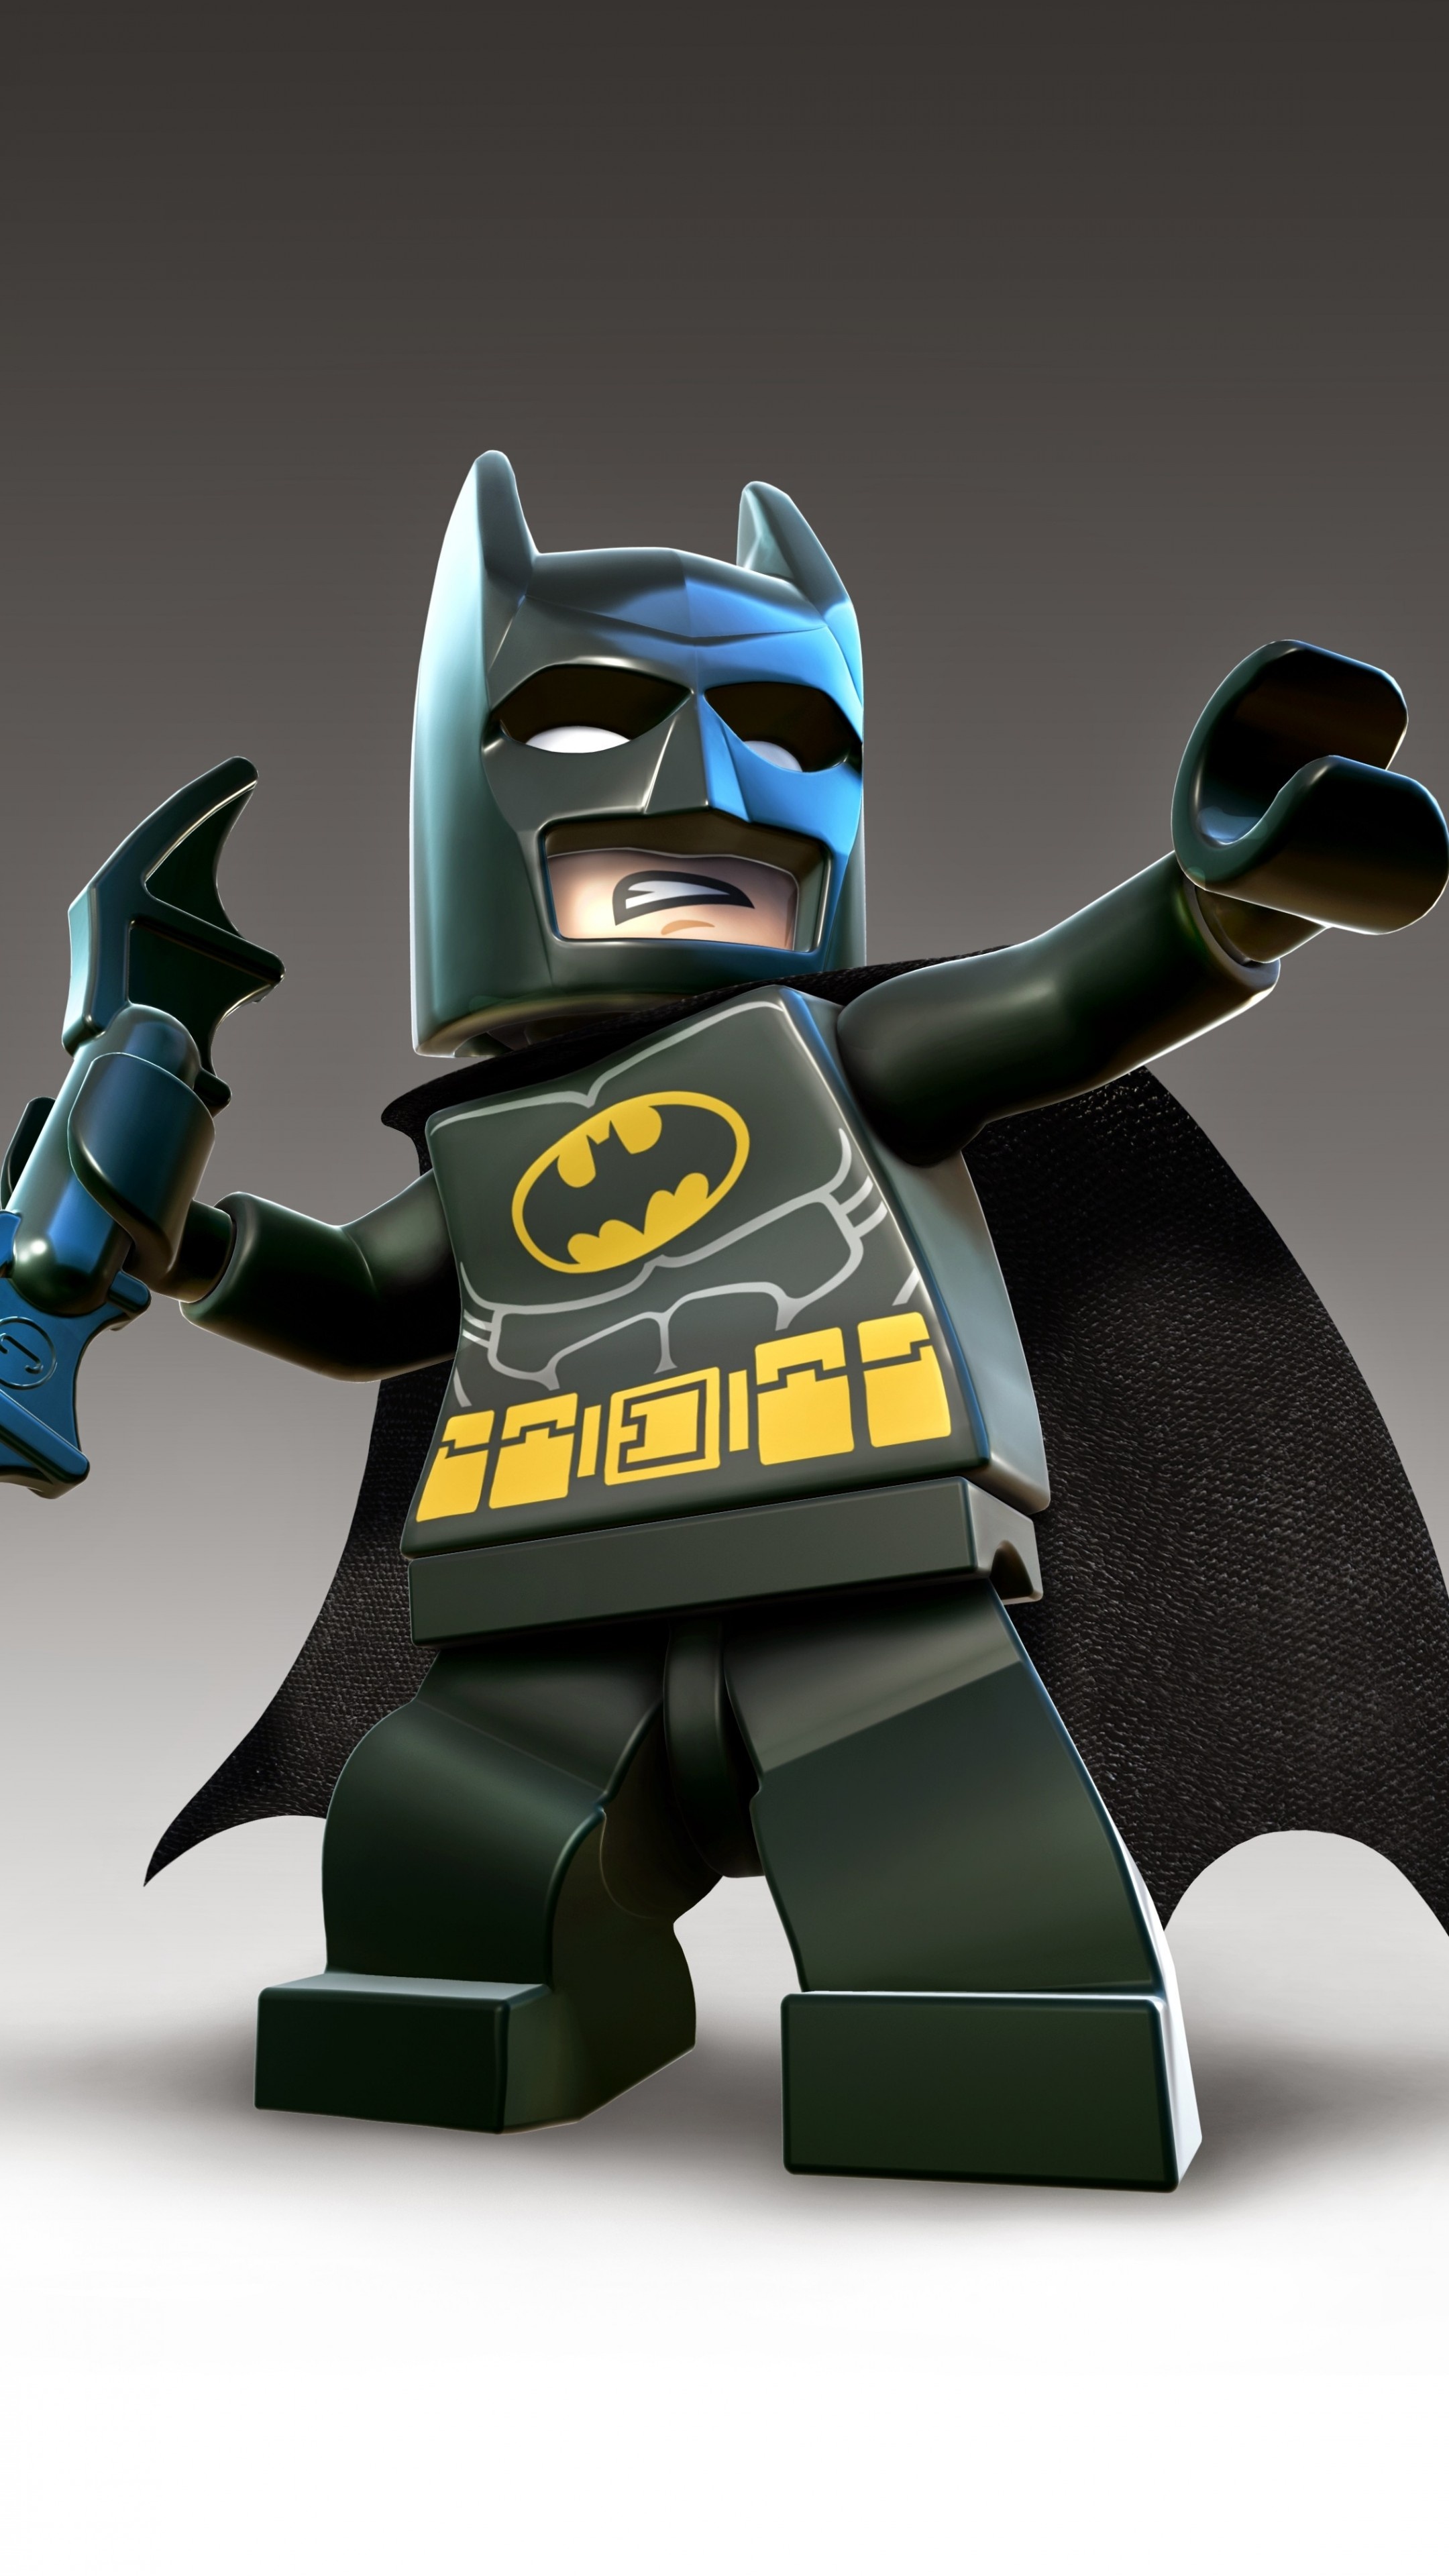 Lego Batman Movie wallpaper, Batman Lego mashup, Best movie moments, 2160x3840 4K Phone